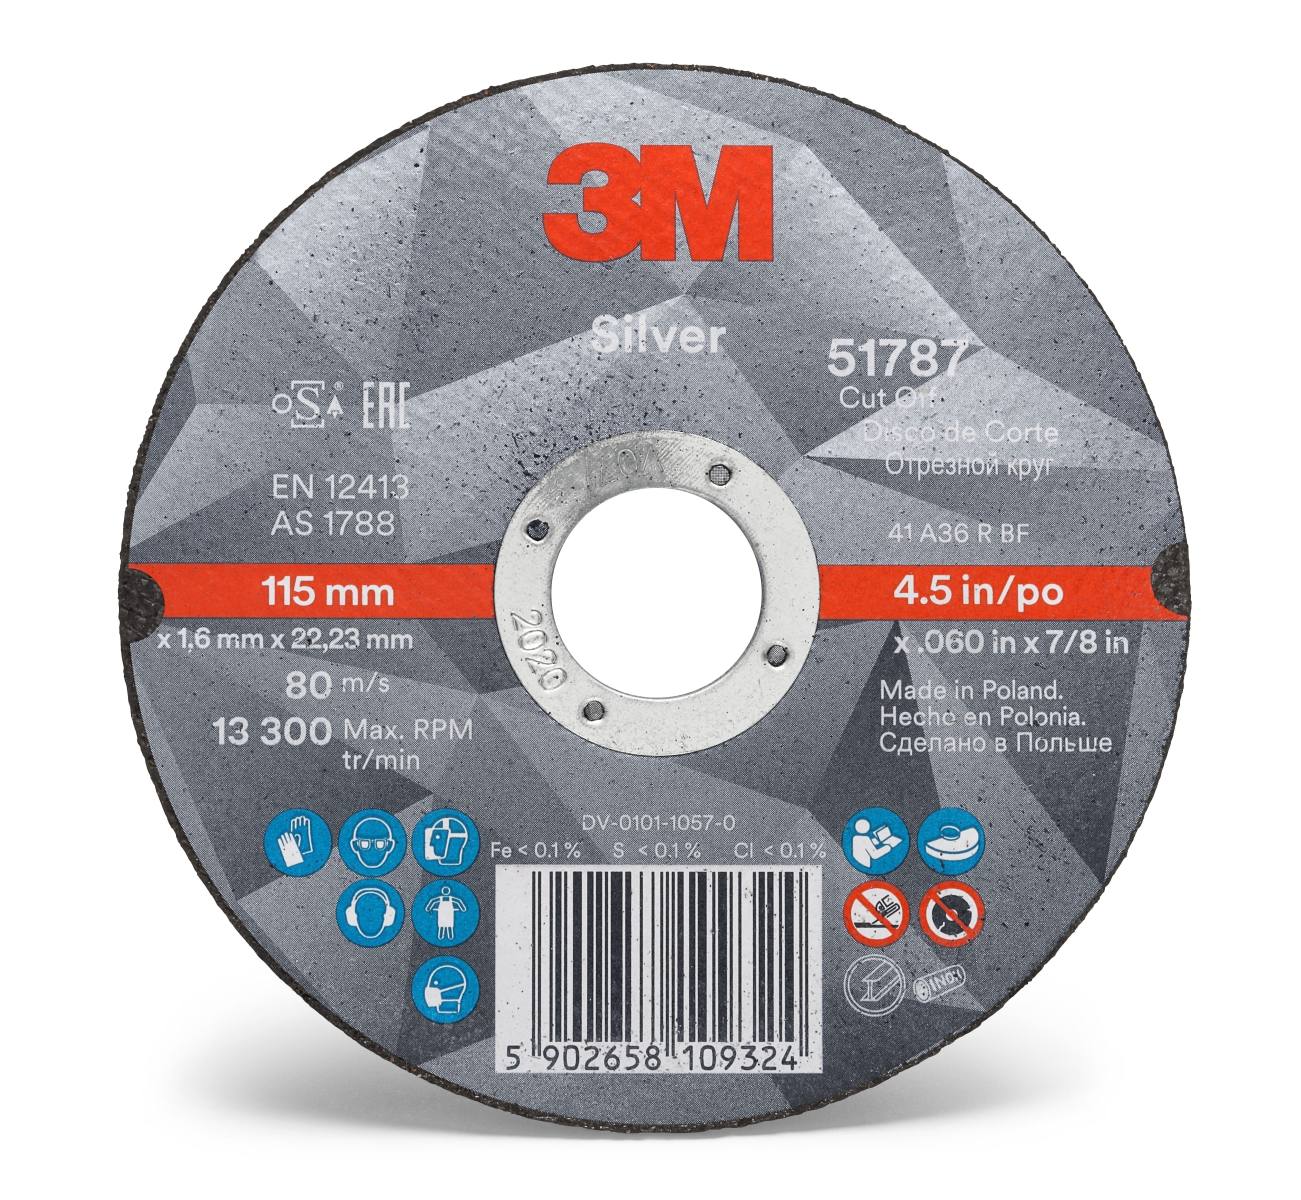 3M Silver Cut-Off Wheel cutting disc, 230 mm, 3.0 mm, 22.23 mm, T41, 51806